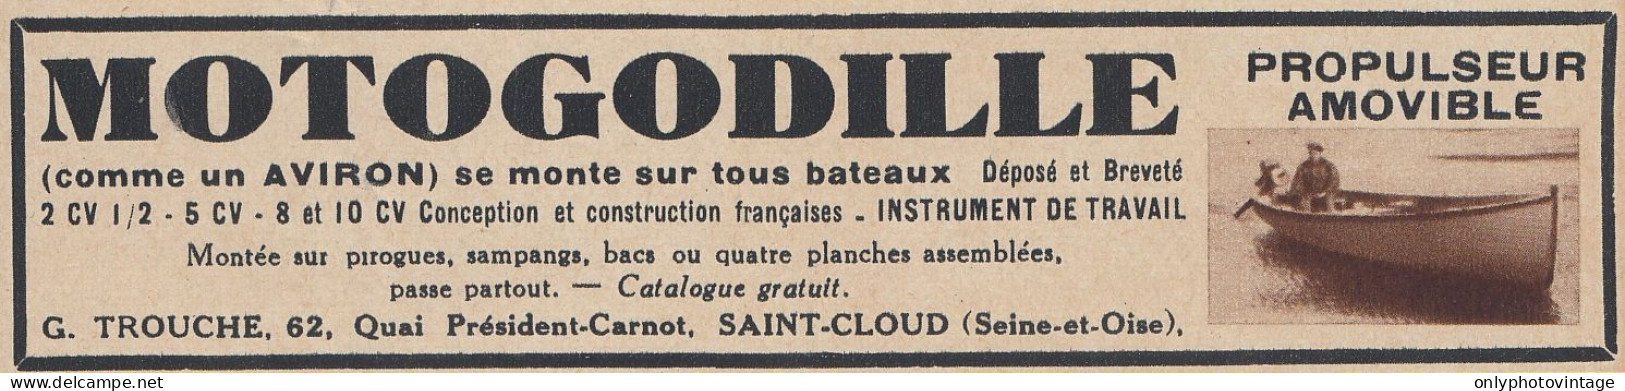 MOTOGODILLE Propulseur Amovible - 1936 Vintage Advertising - Pubblicit�  - Reclame